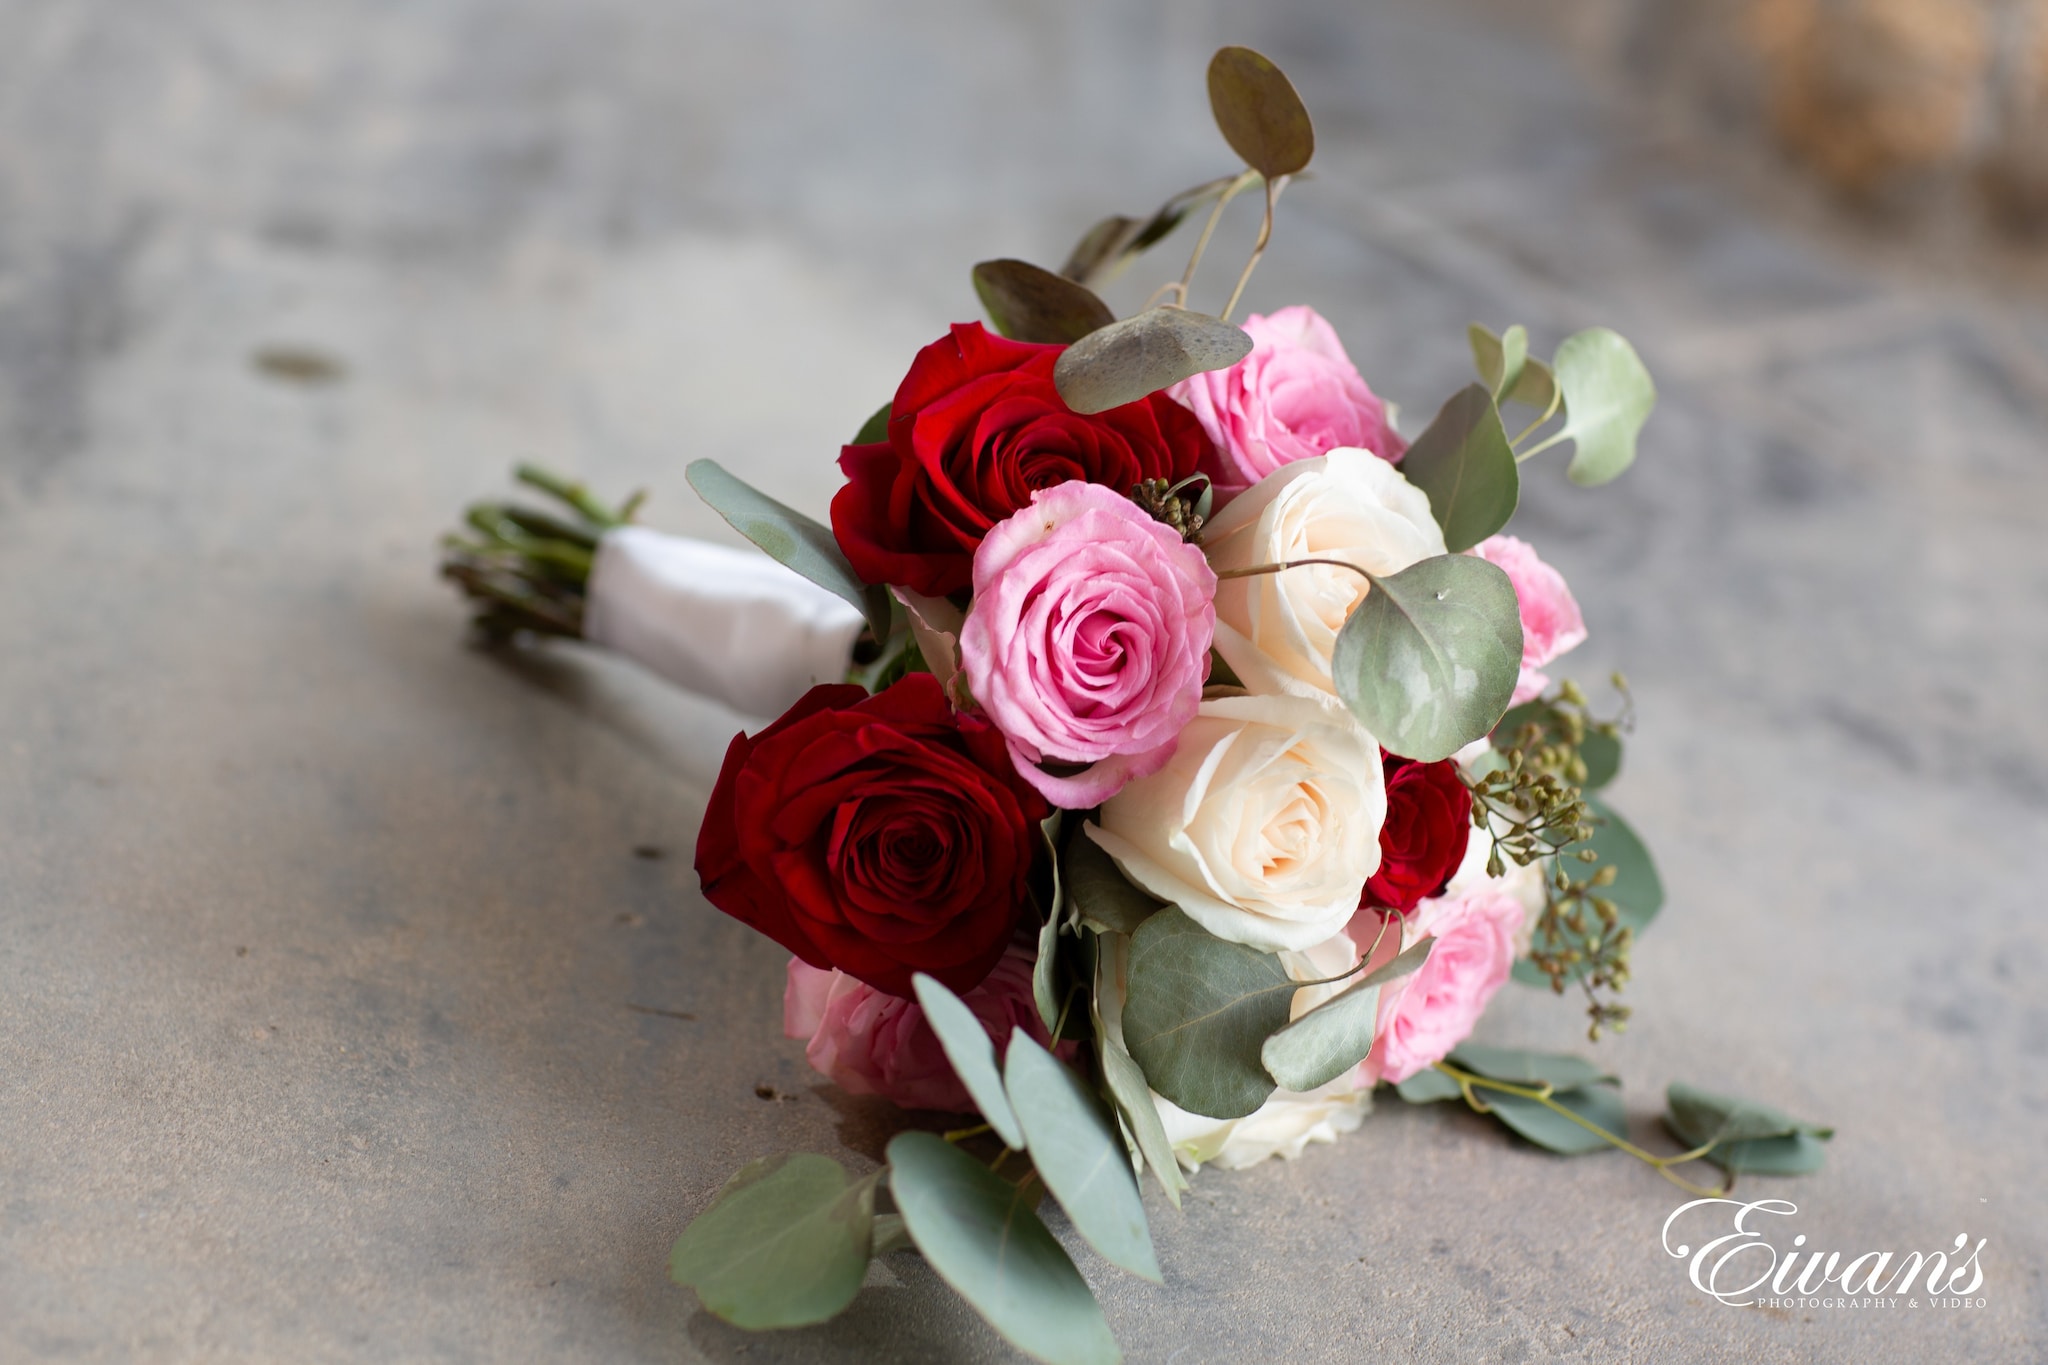 240 Mini Roses ~ MANY COLORS ~ Bride Bouquets Centerpieces Silk Wedding Flowers 